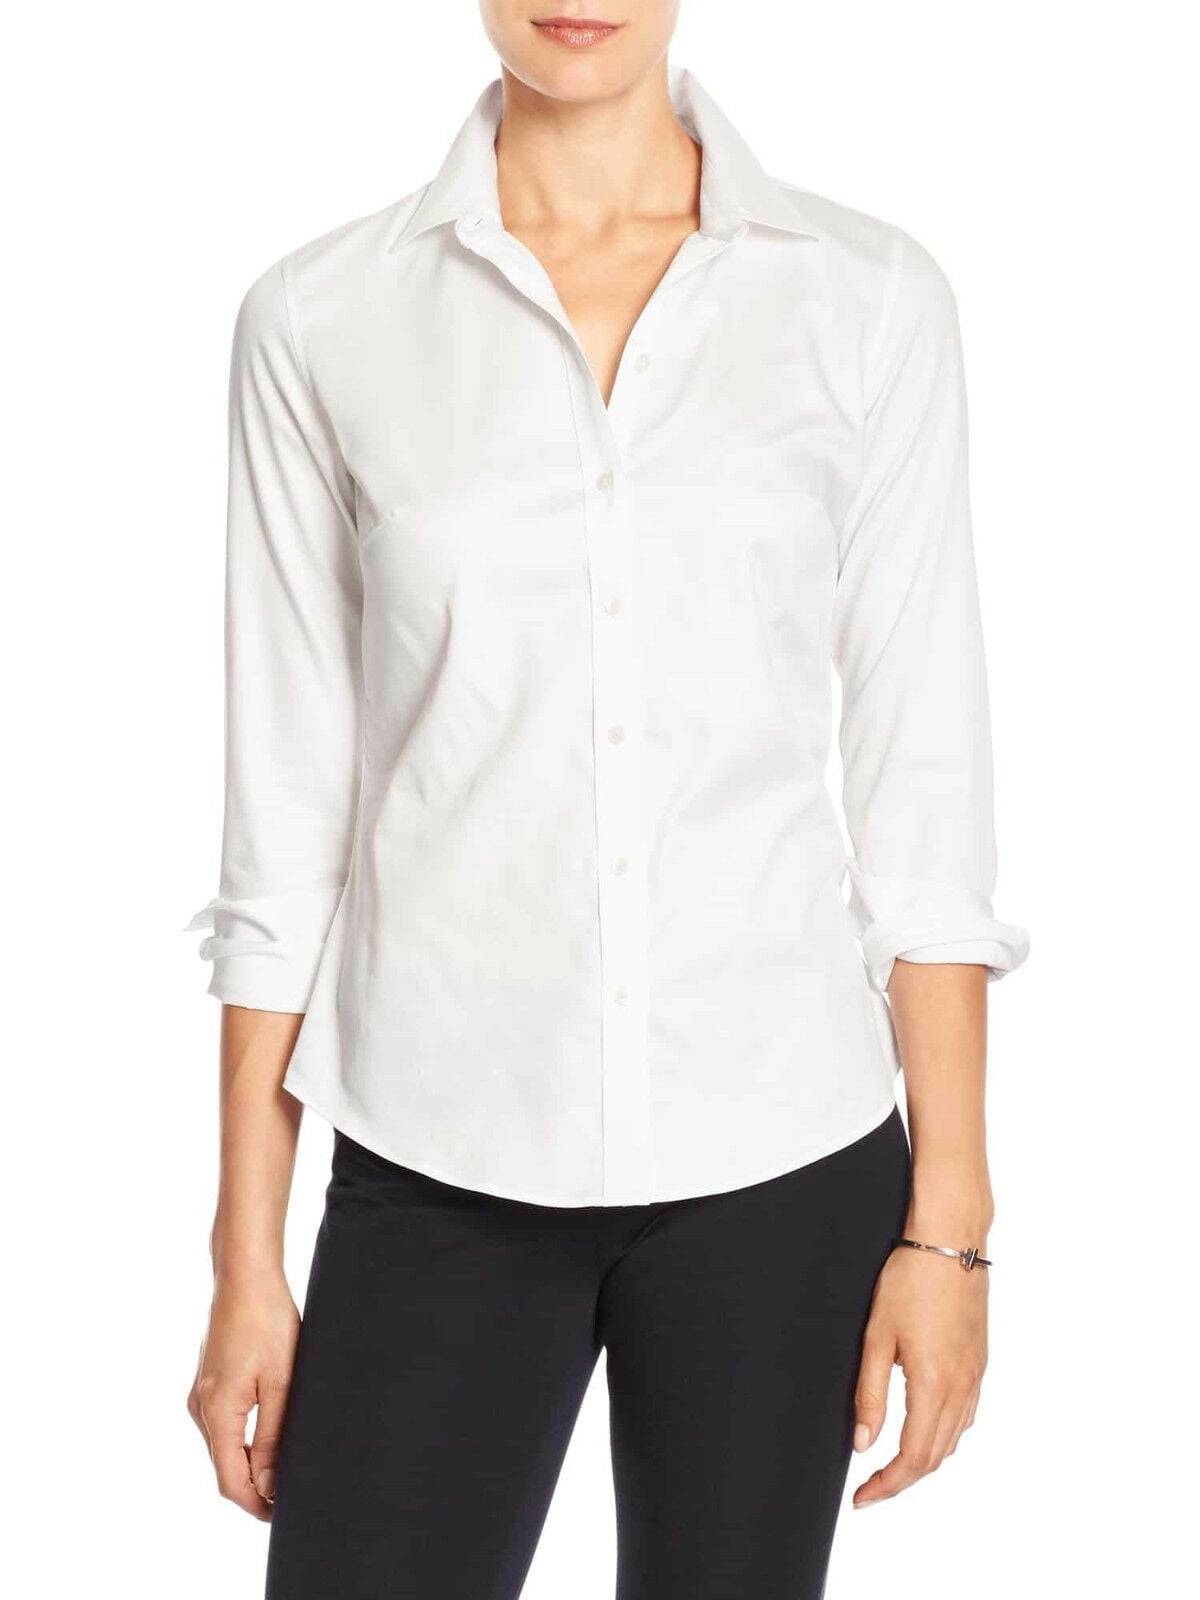 New Banana Republic Womens White Tailored Fit No Iron Button Down Shirt Sz  12 4981-4